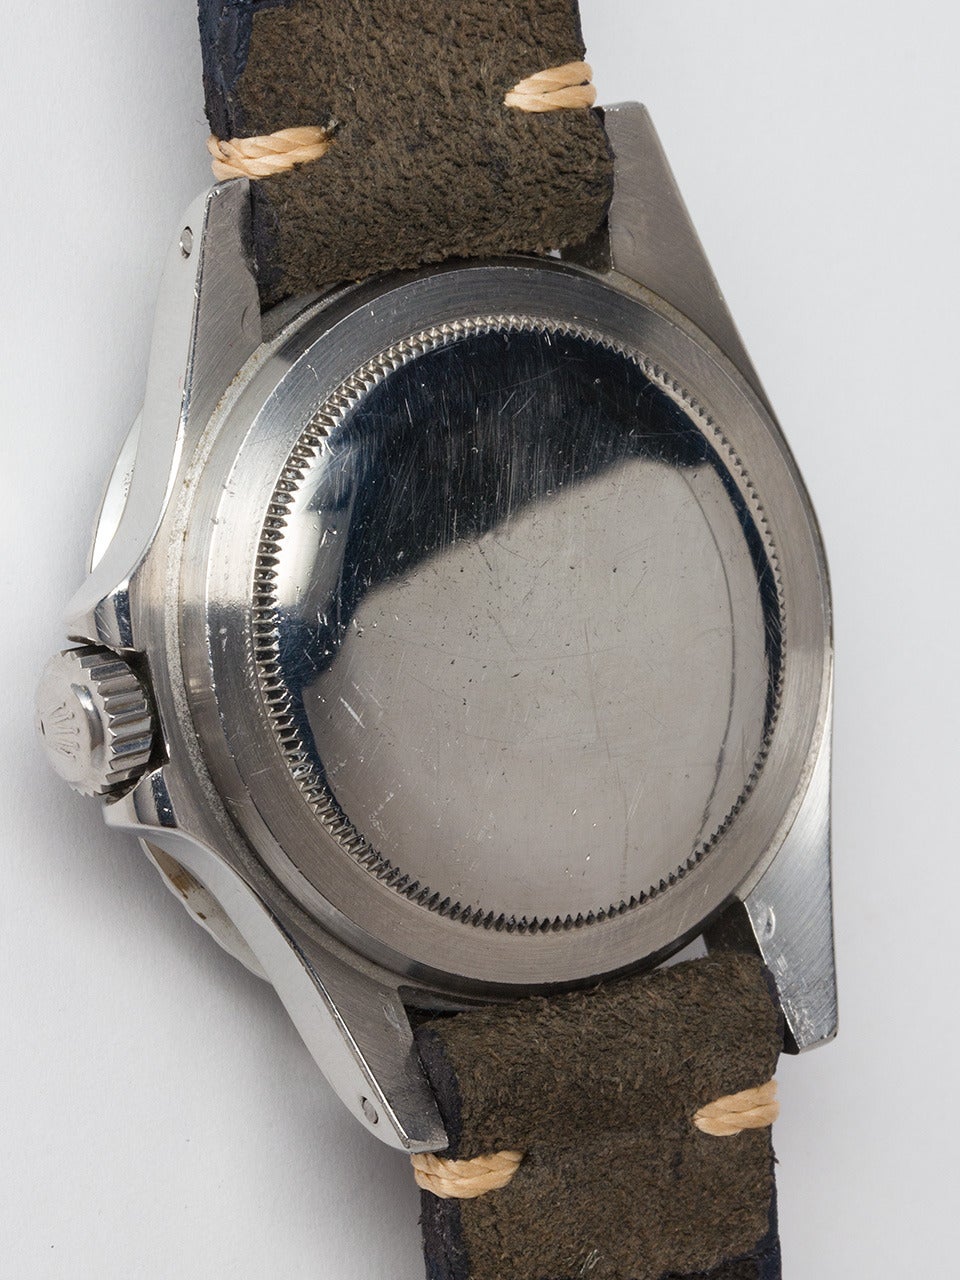 Men's Rolex Stainless Steel Oyster Perpetual Submariner Wristwatch Ref 5513